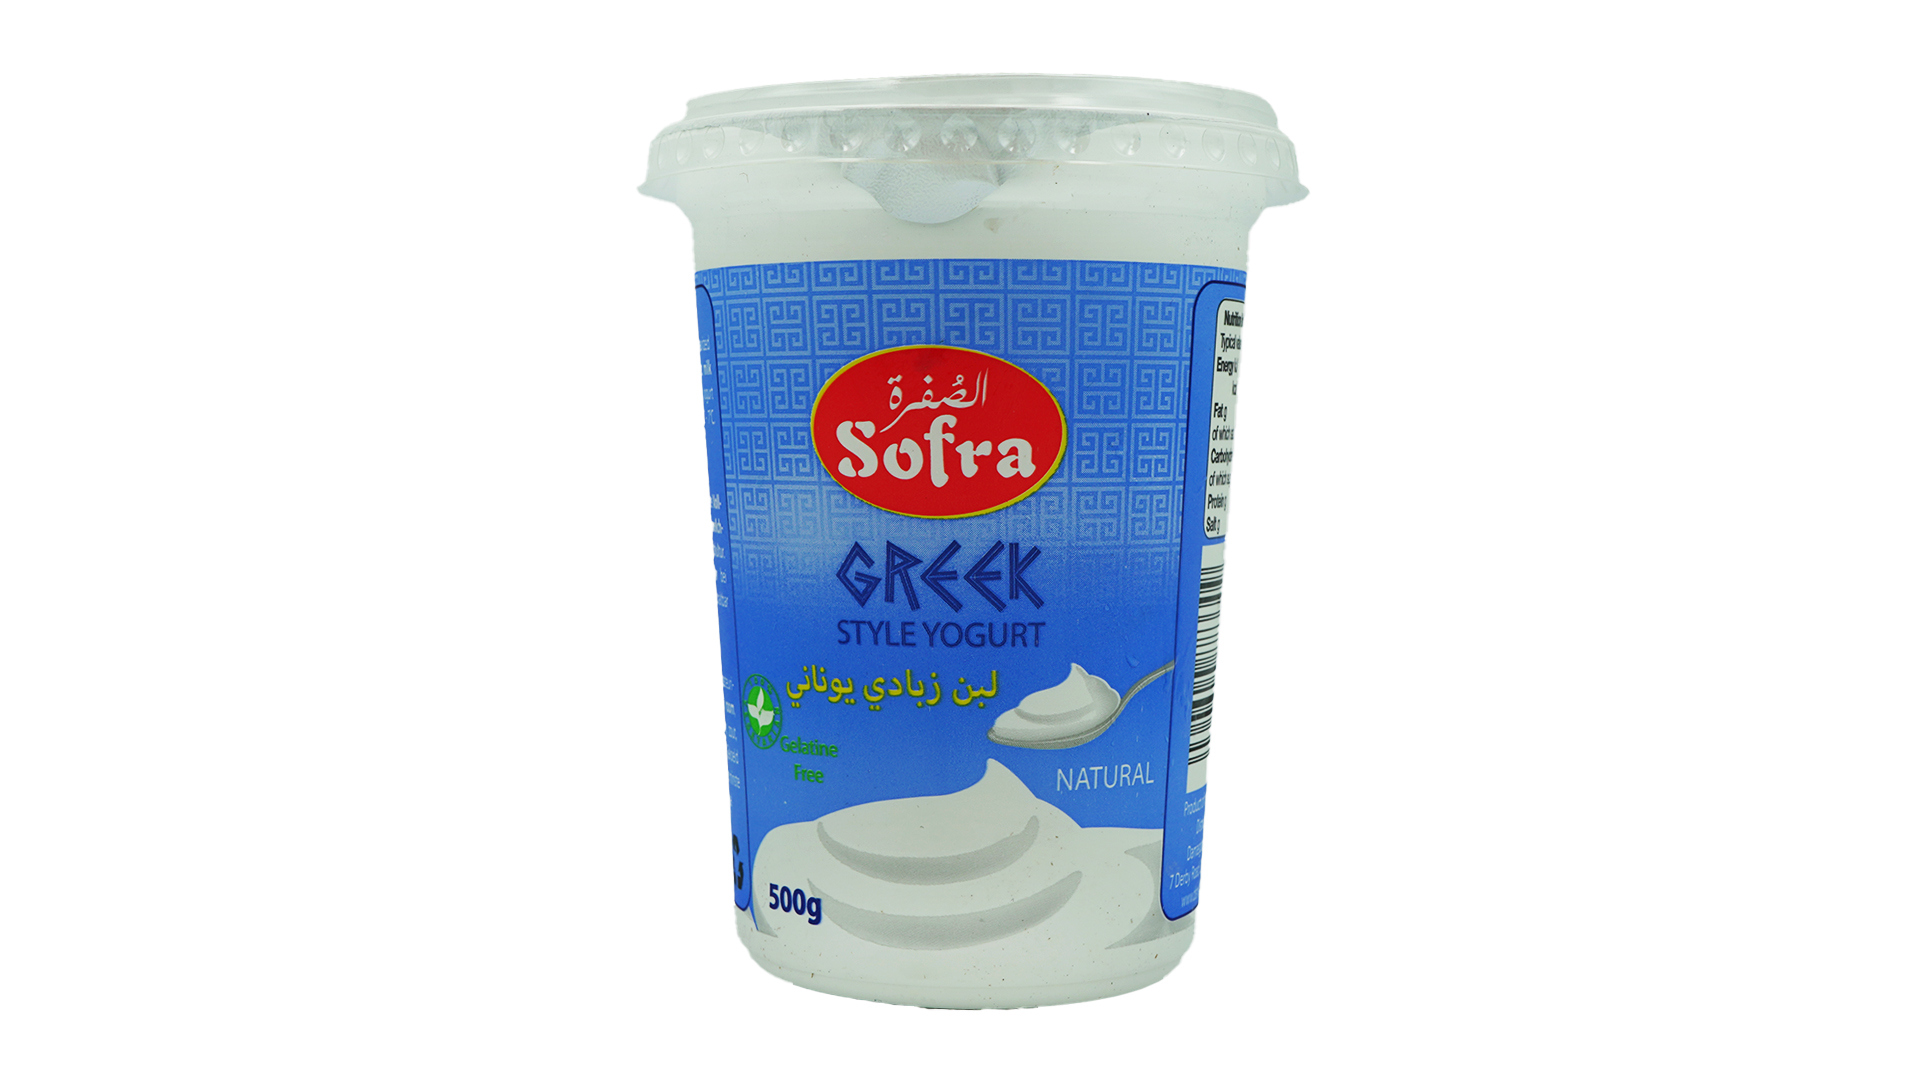 Sofra greek style yogurt 500g 1